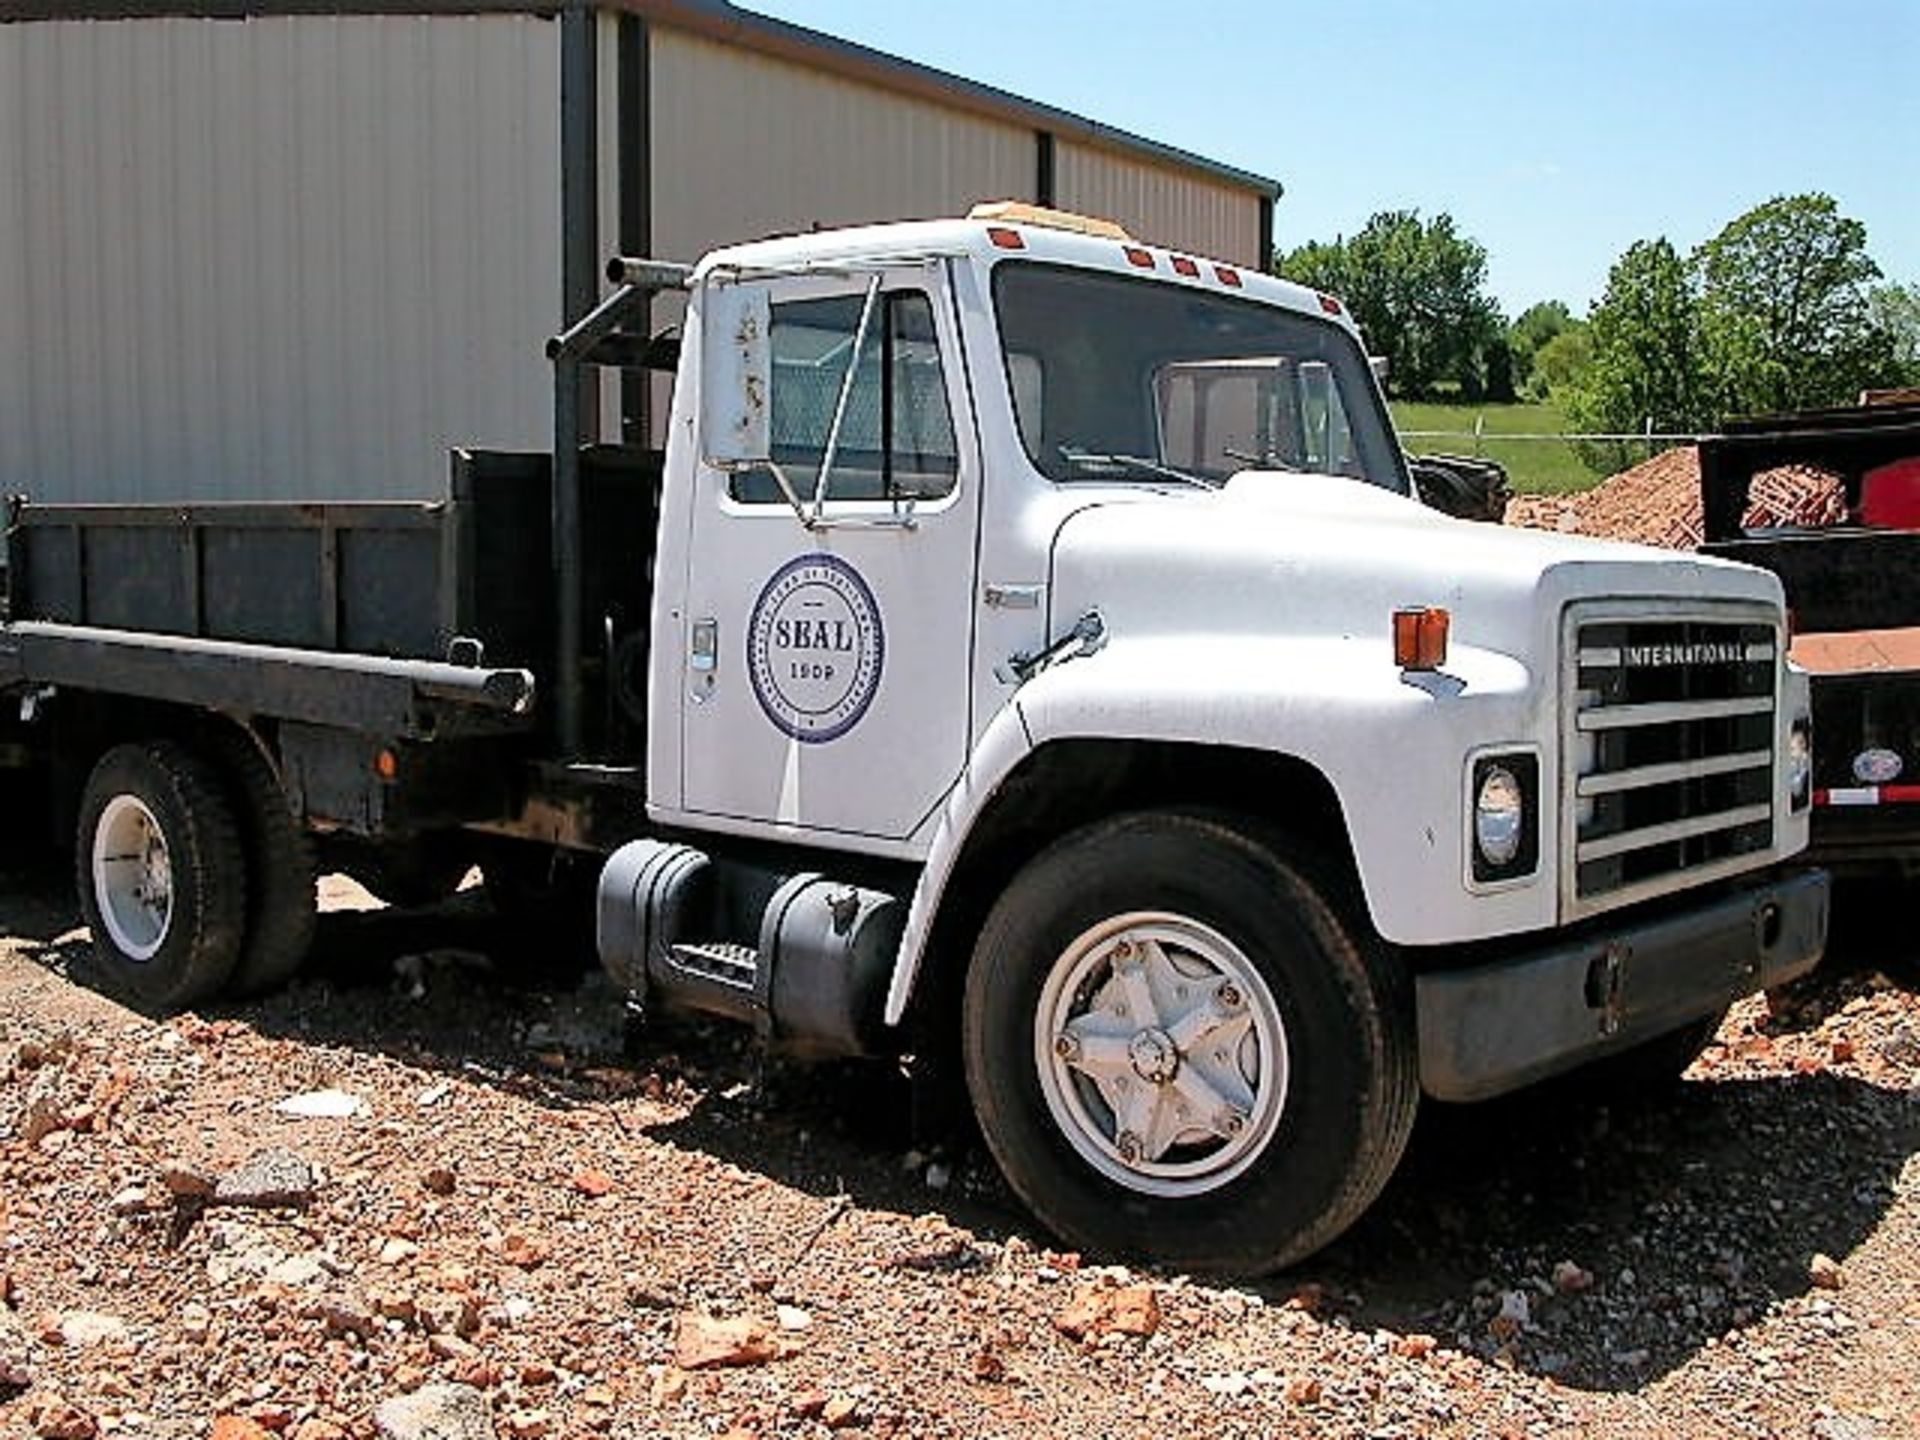 1981 Int'l Diesel Dump Truck - (40,578) Miles - Runs Good - Lg. Winch - Metal Dump Bed - Good Tires